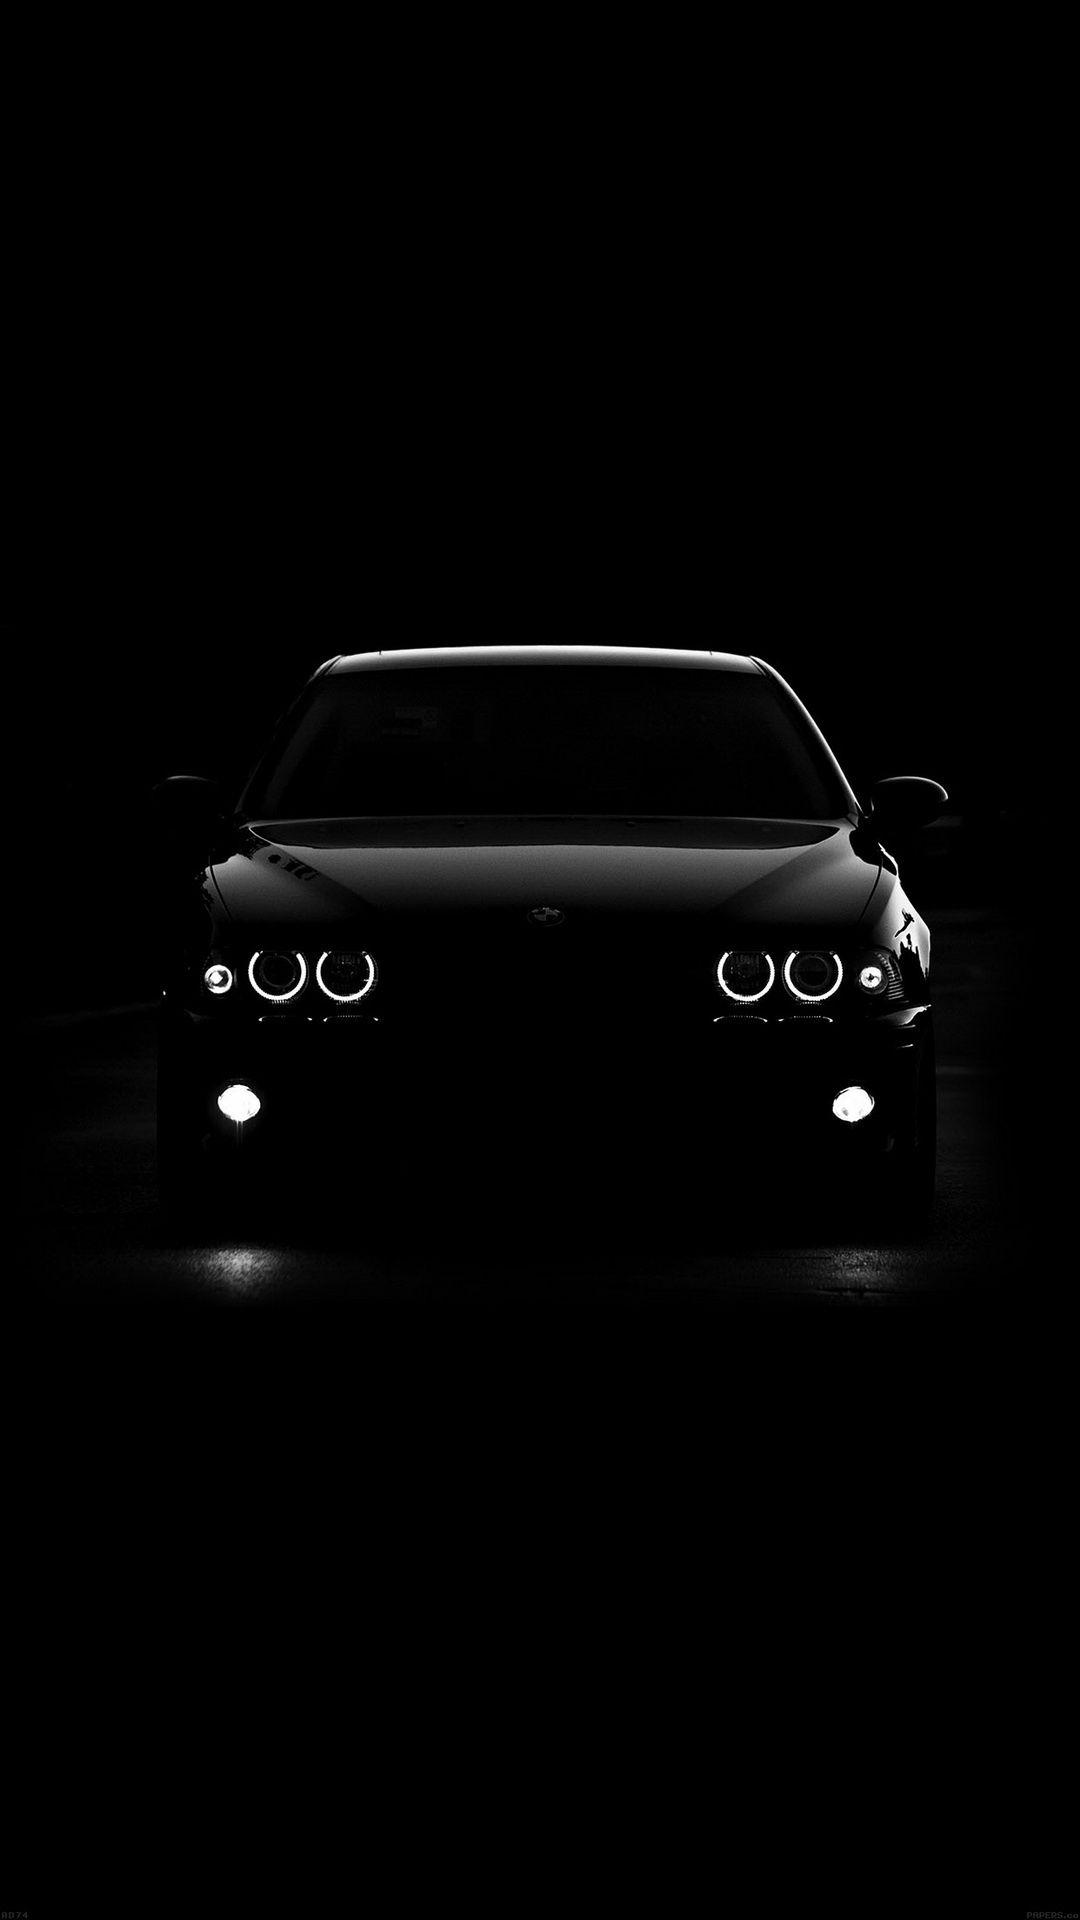 iPhone Wallpaper. Vehicle, Black, Car, Automotive design